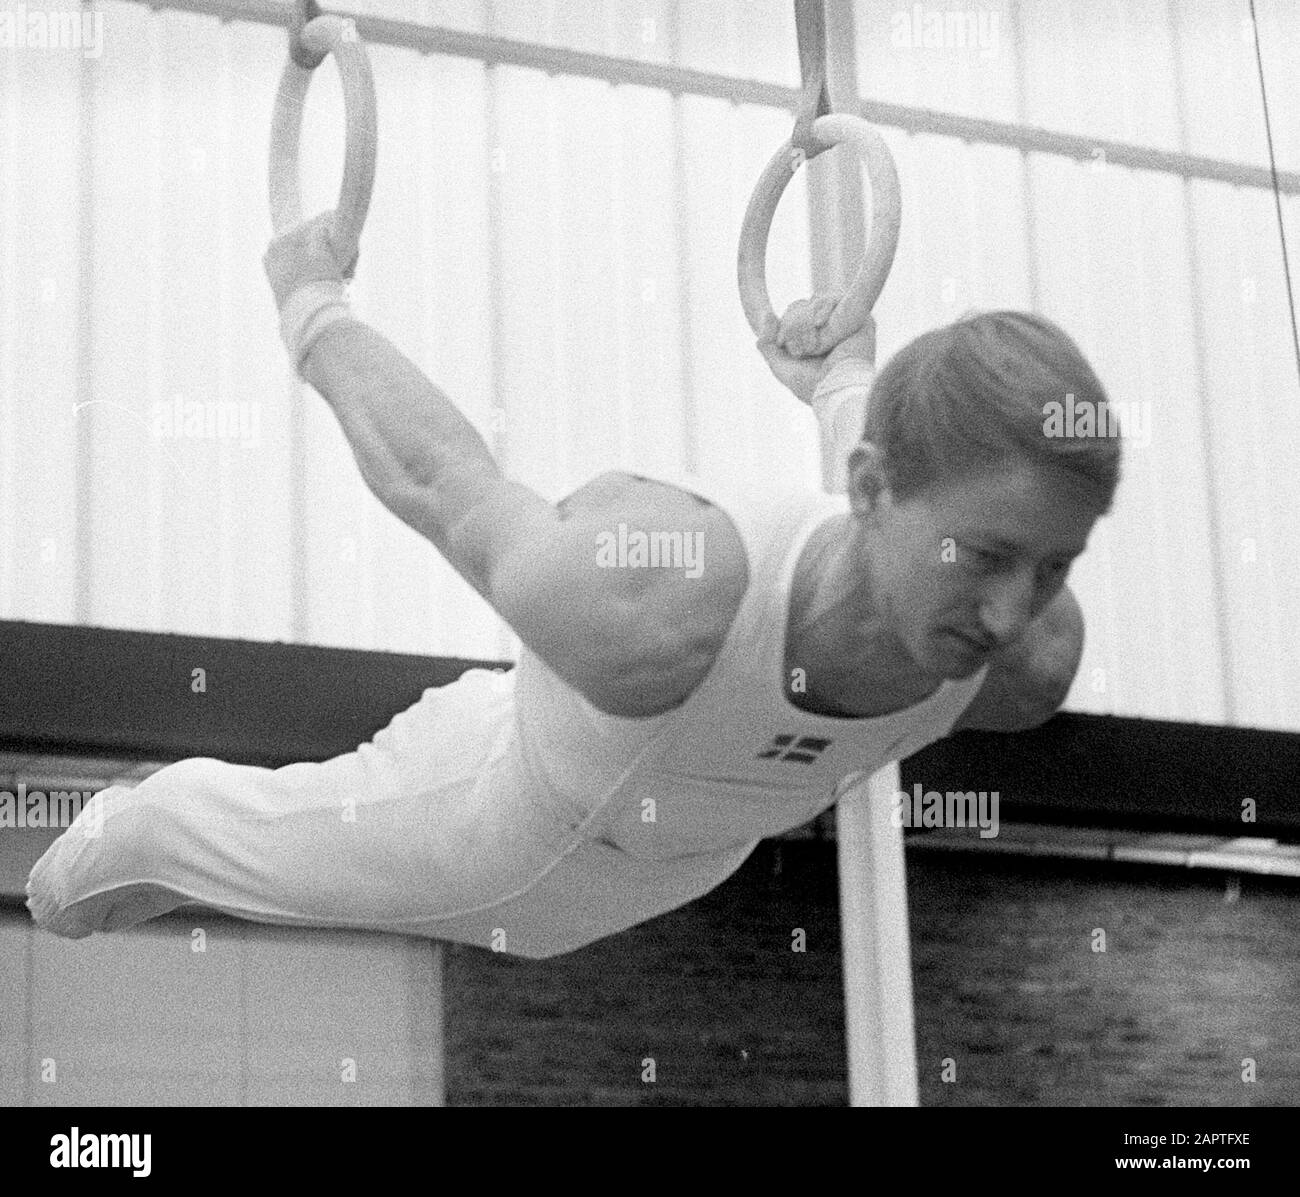 The Netherlands versus Denmark gymnastics at Zaandam. Hans Peter Nielsen (champion Denmark) to rings in action; Stock Photo